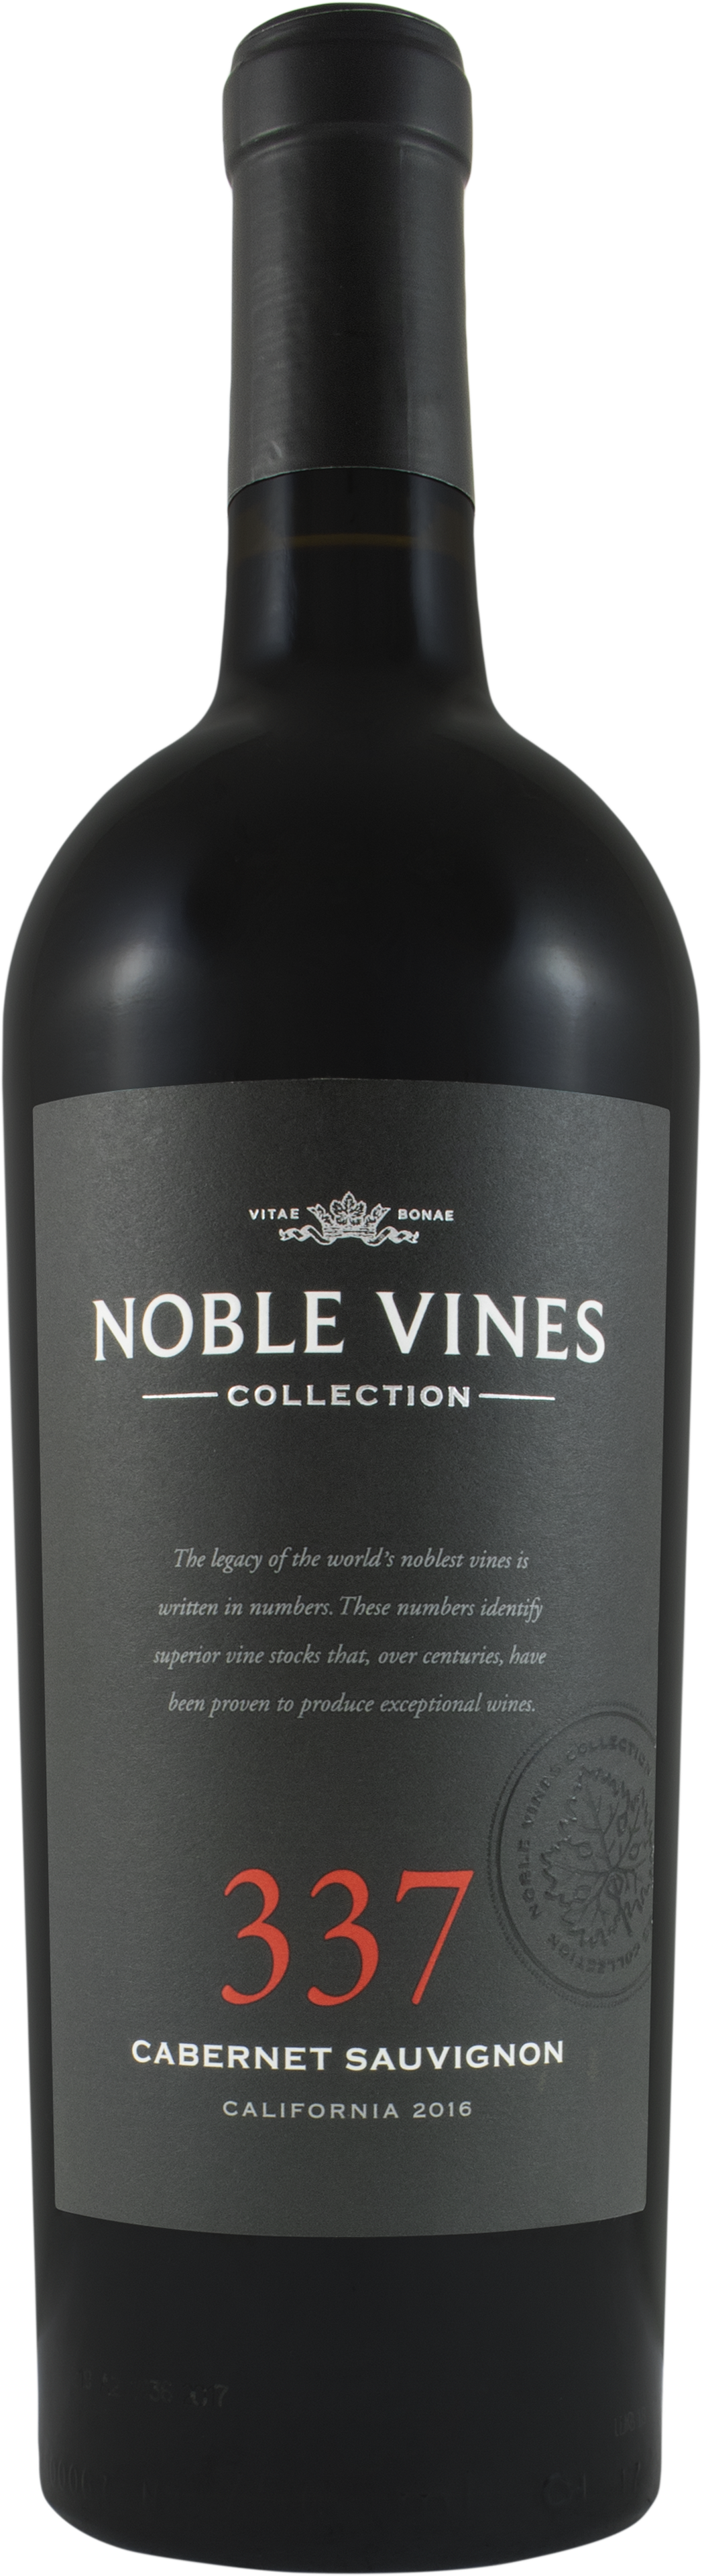 images/wine/Red Wine/Noble Vines 337 Cabernet Sauvignon .png